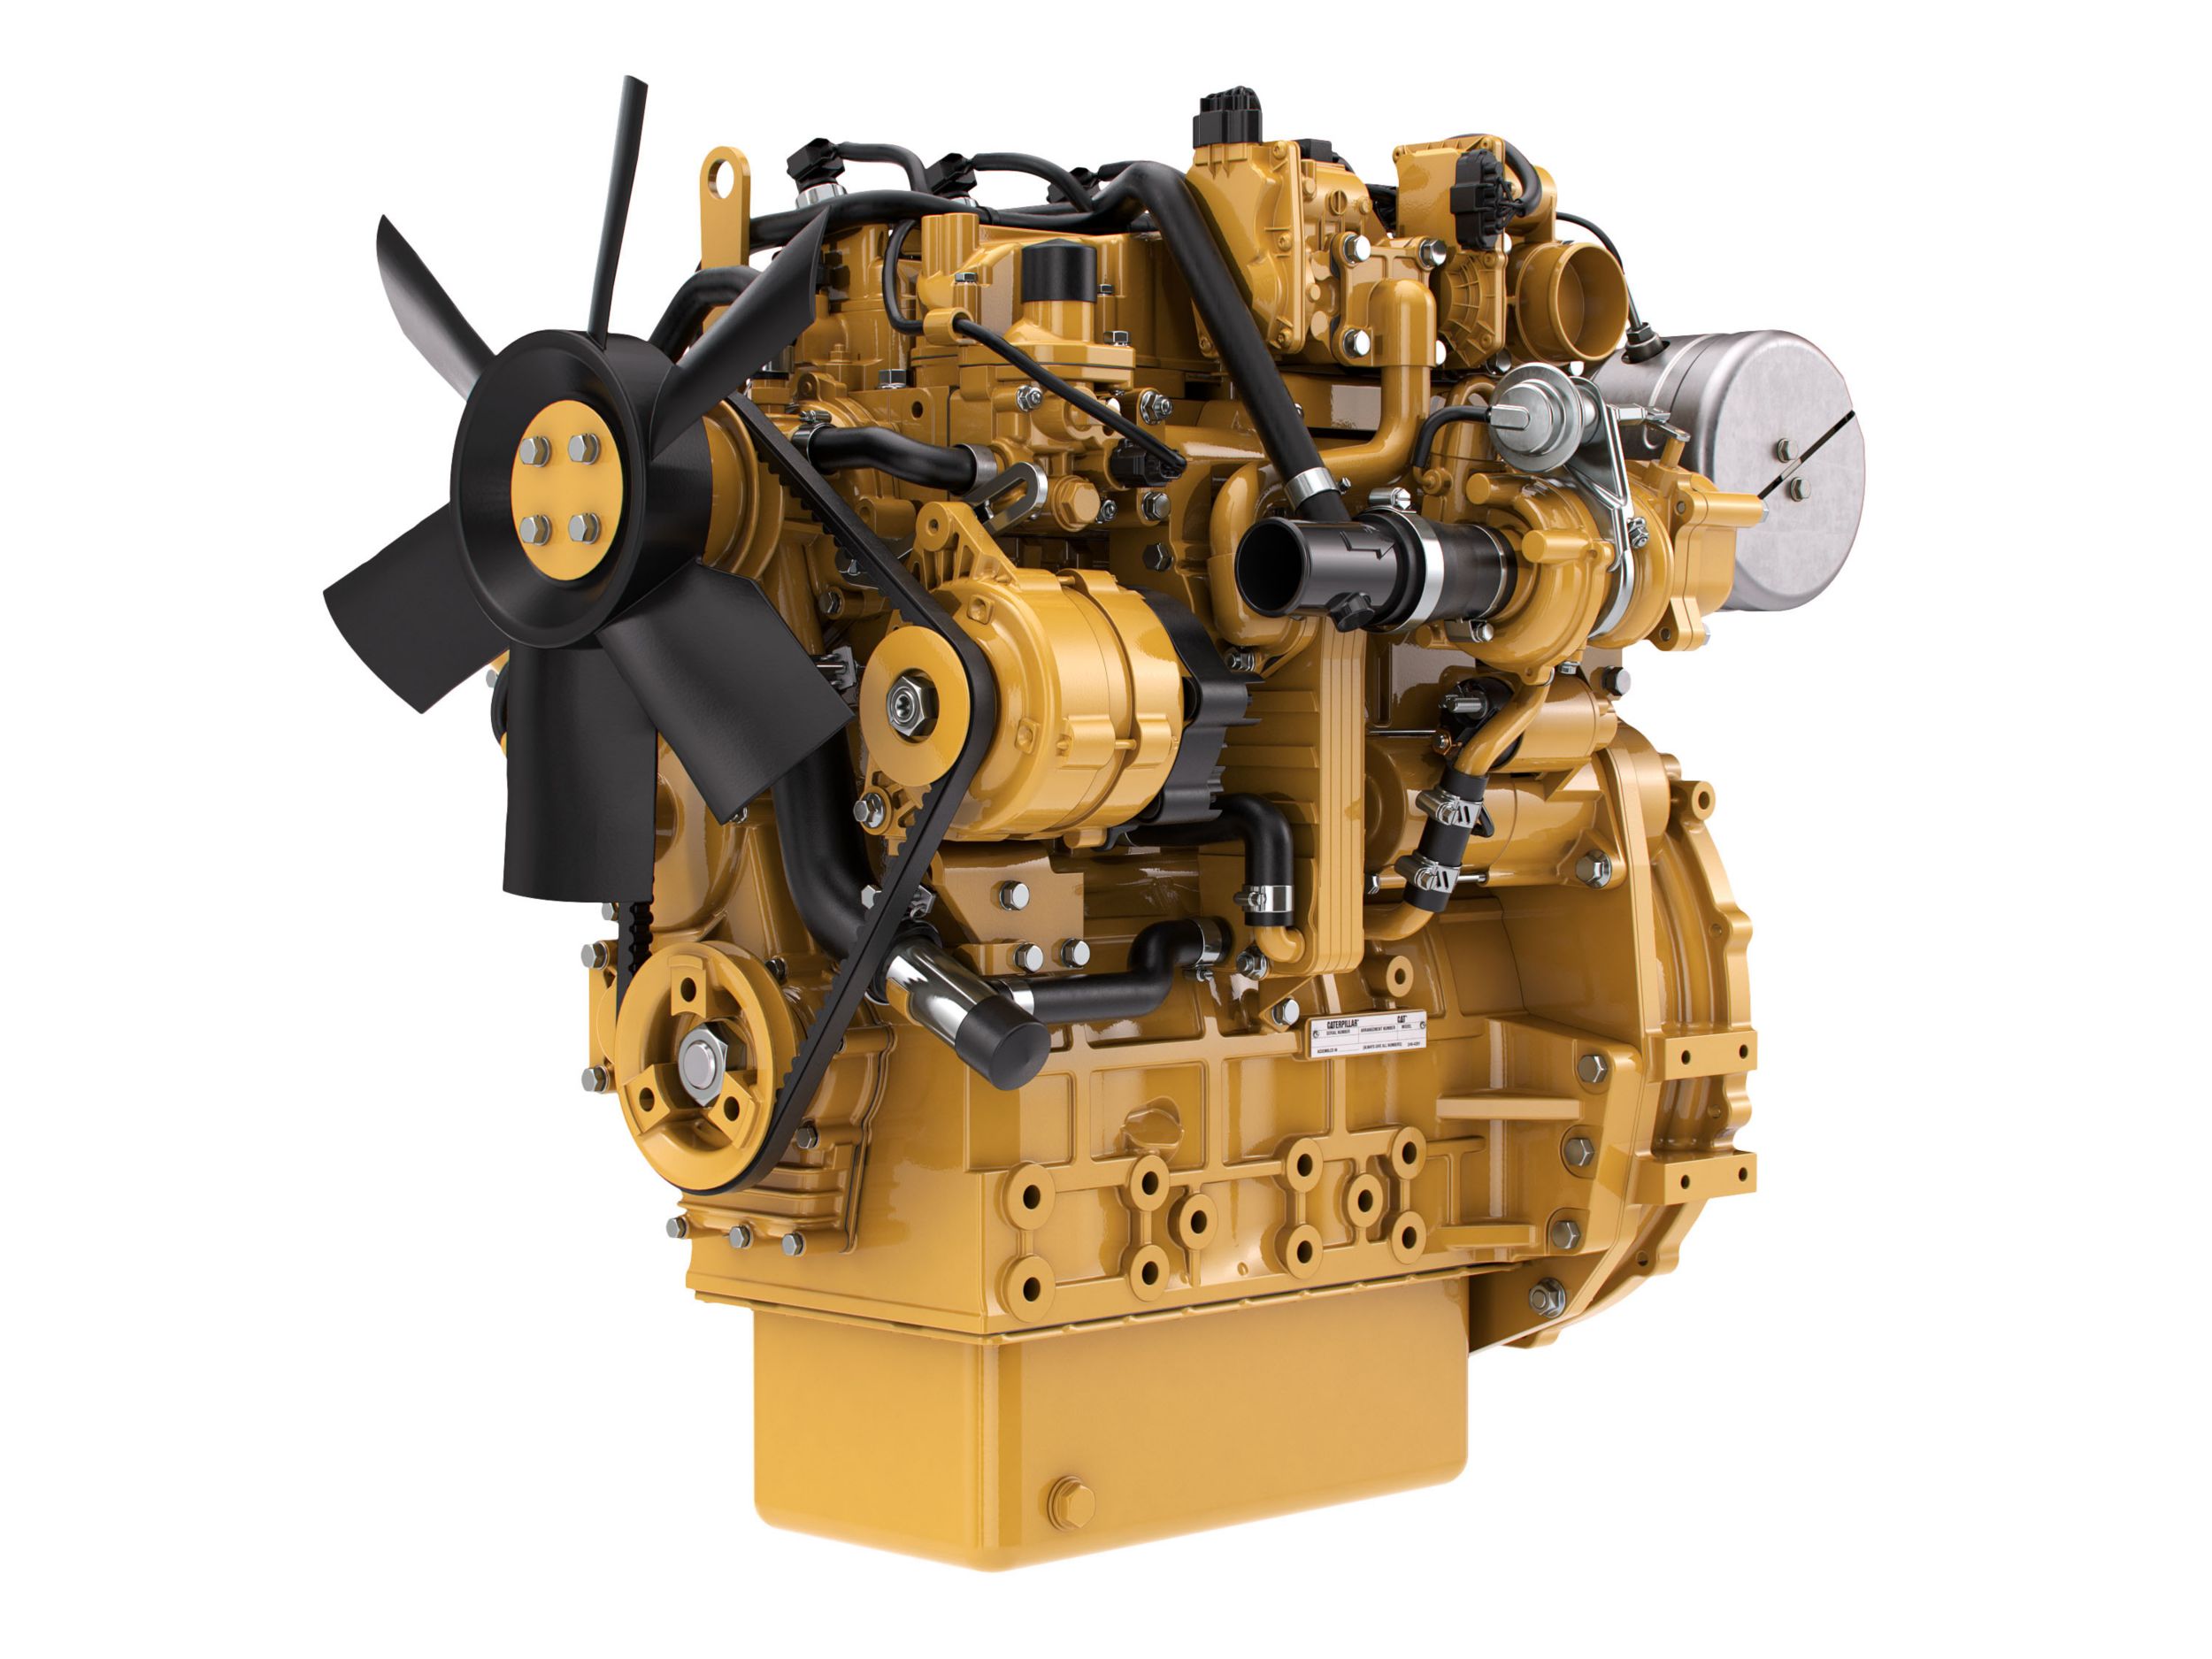 C2.2 Tier 4 Diesel Engines - Highly Regulated>